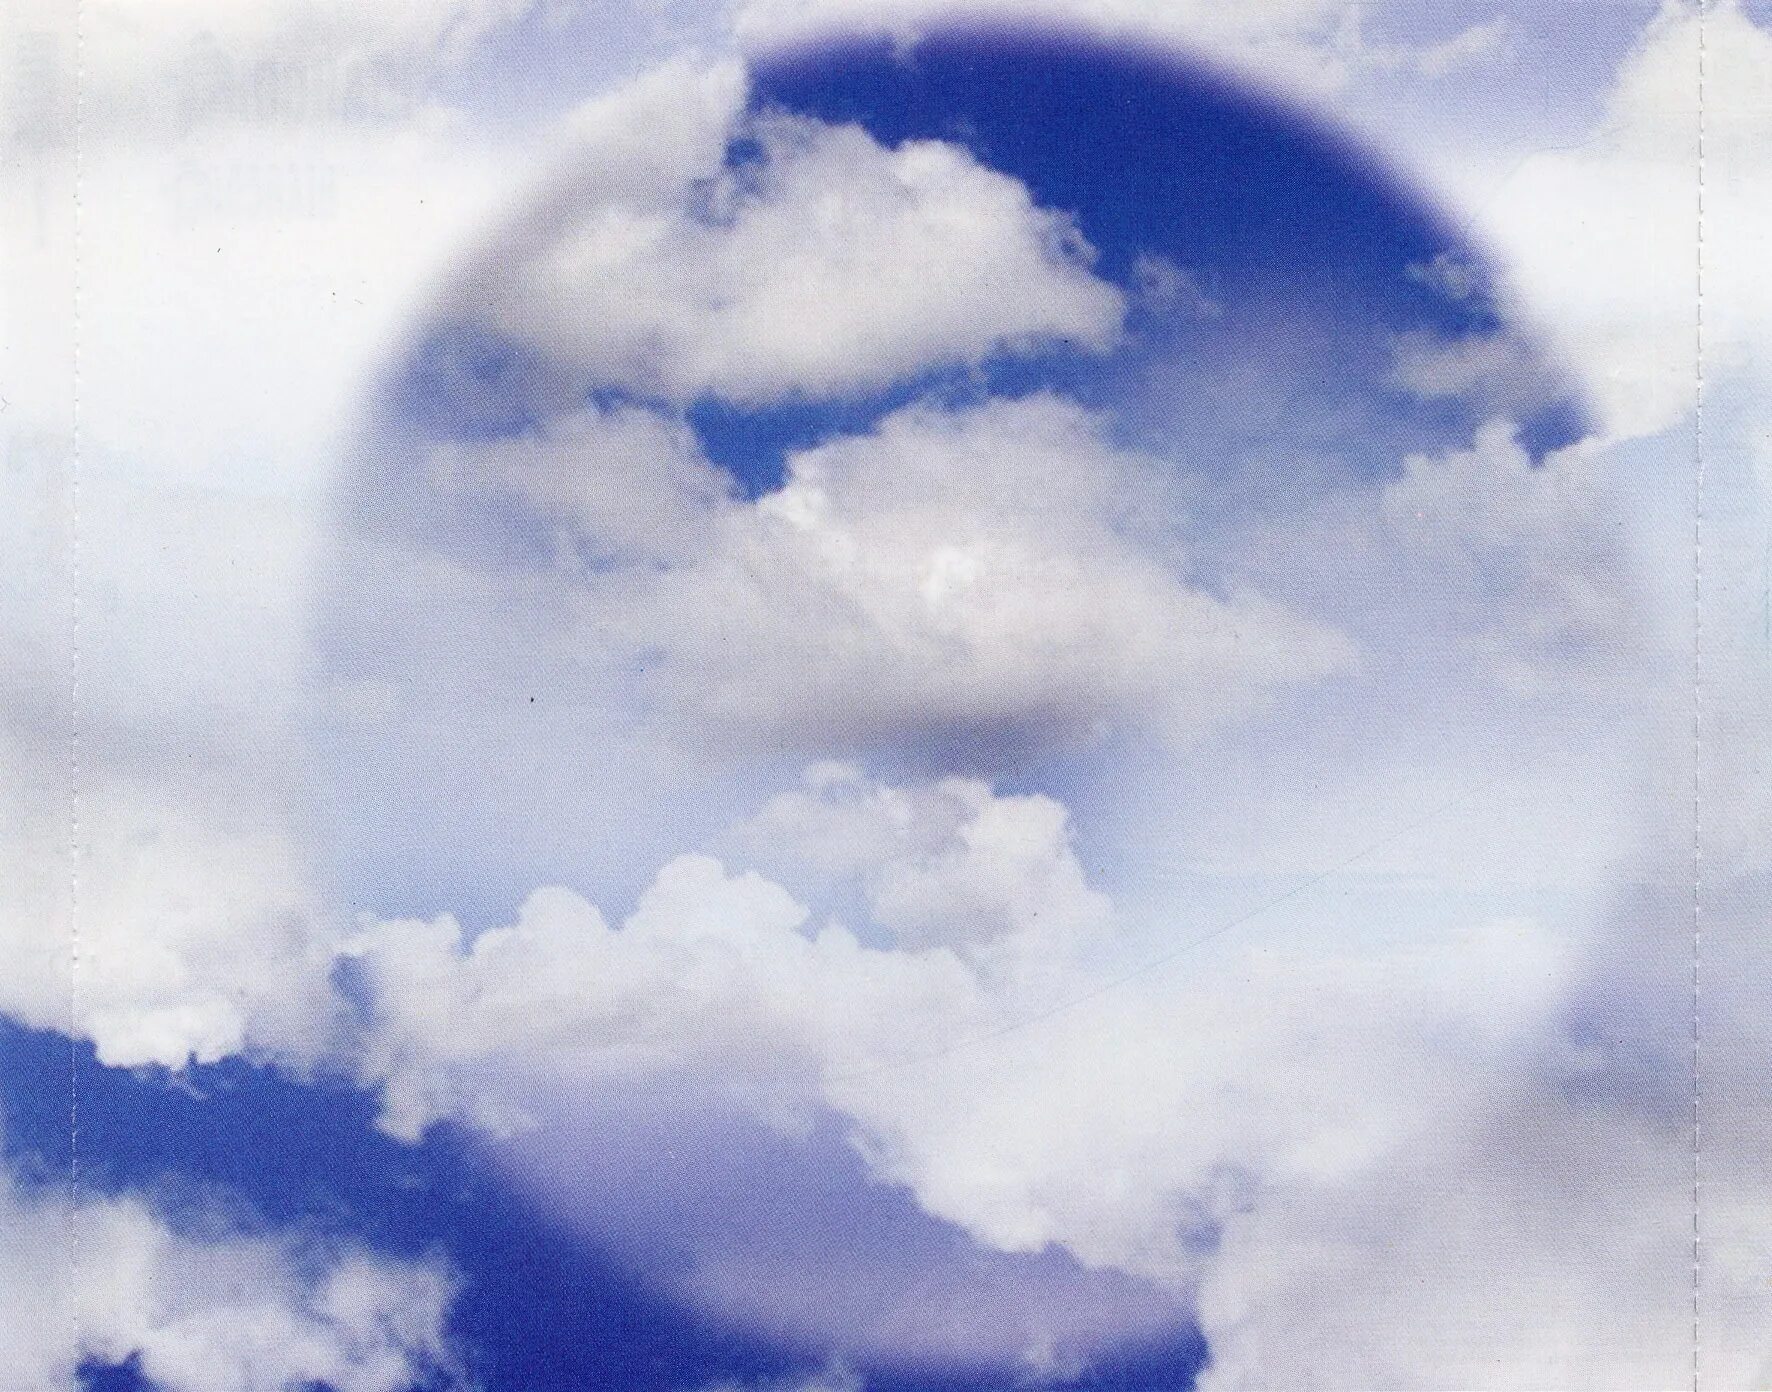 Облако самсунг. H2s облака. Игра на самсунг с облаками. Samsung cloud фото.